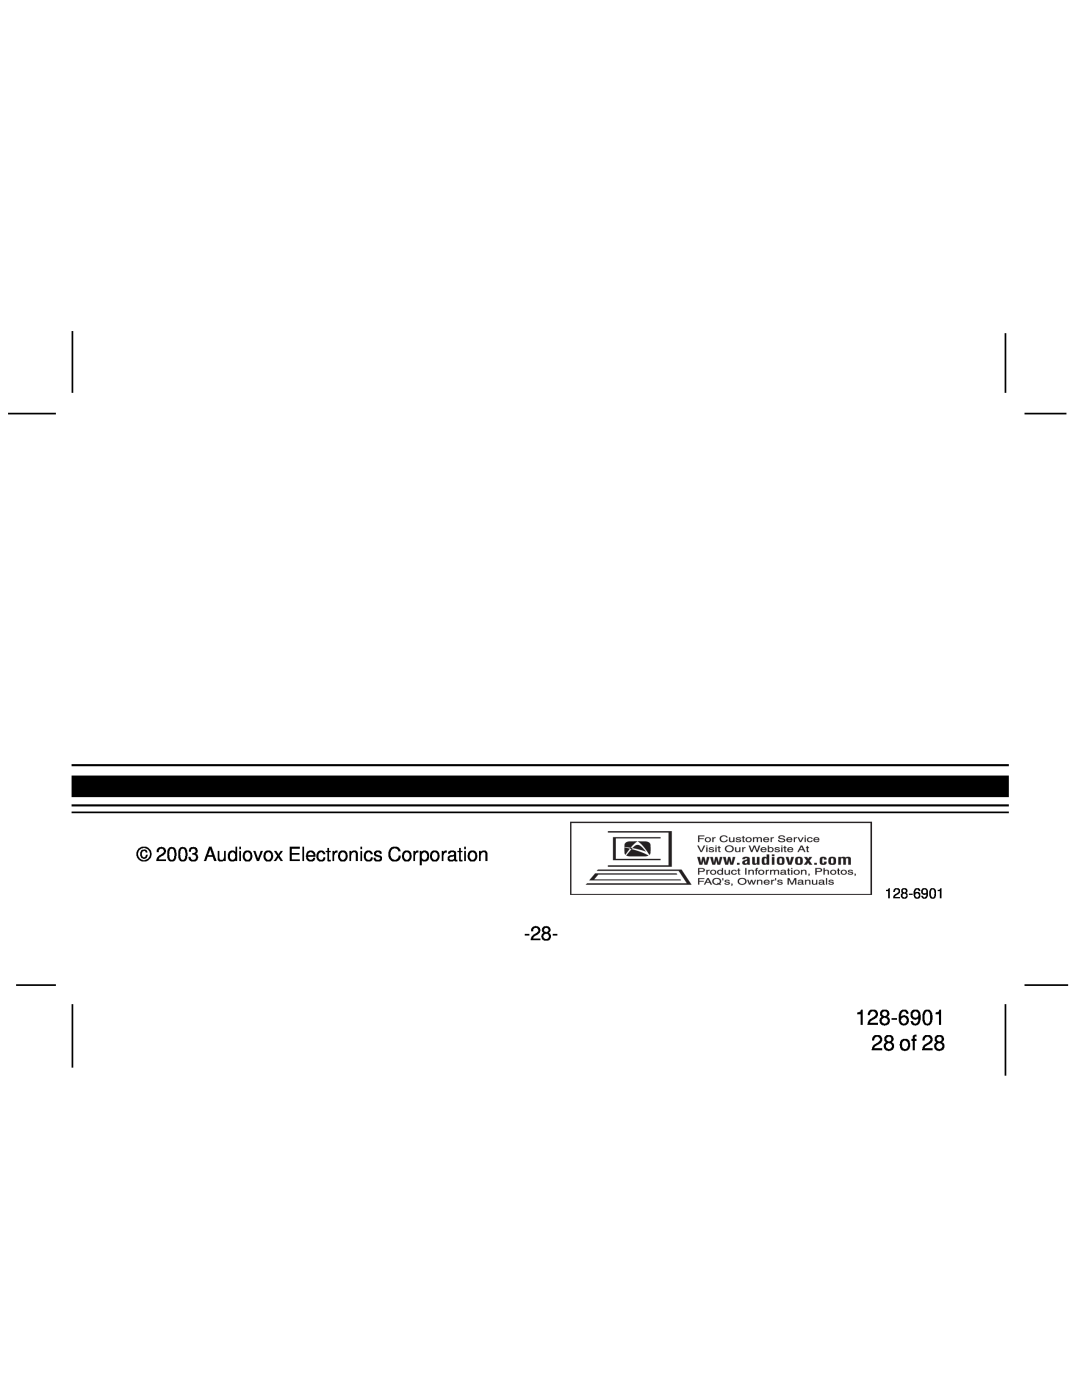 Audiovox SIR-PNP2 manual 128-6901 28 of, Audiovox Electronics Corporation 